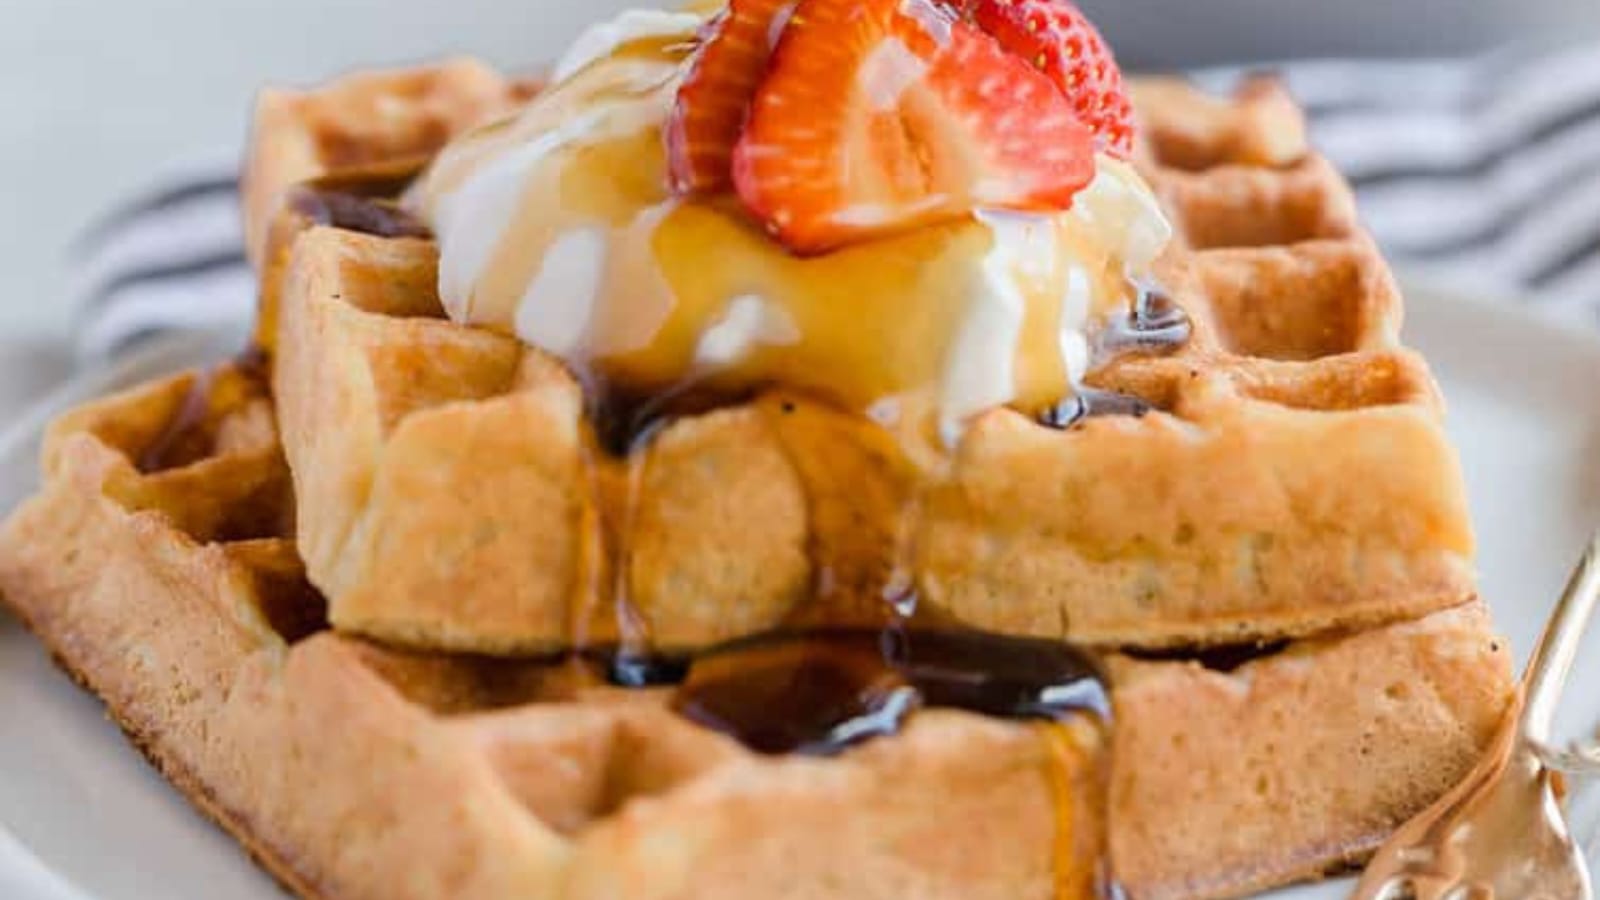 Resep Camilan Ala Kafe yang Praktis, Hemat, dan Mudah Dibuat di Rumah - Buttermilk Waffle